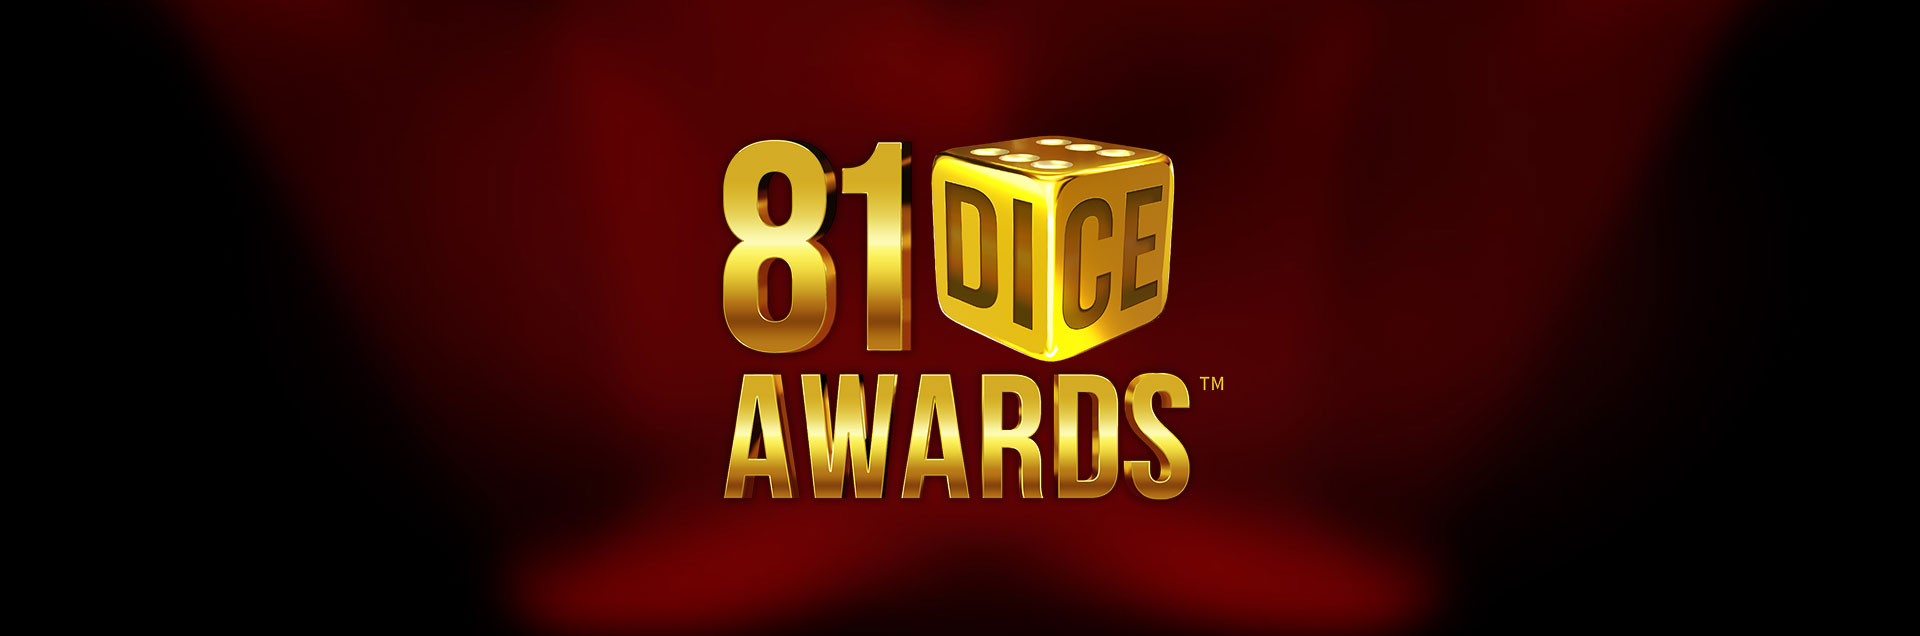 81Dice Awards header games